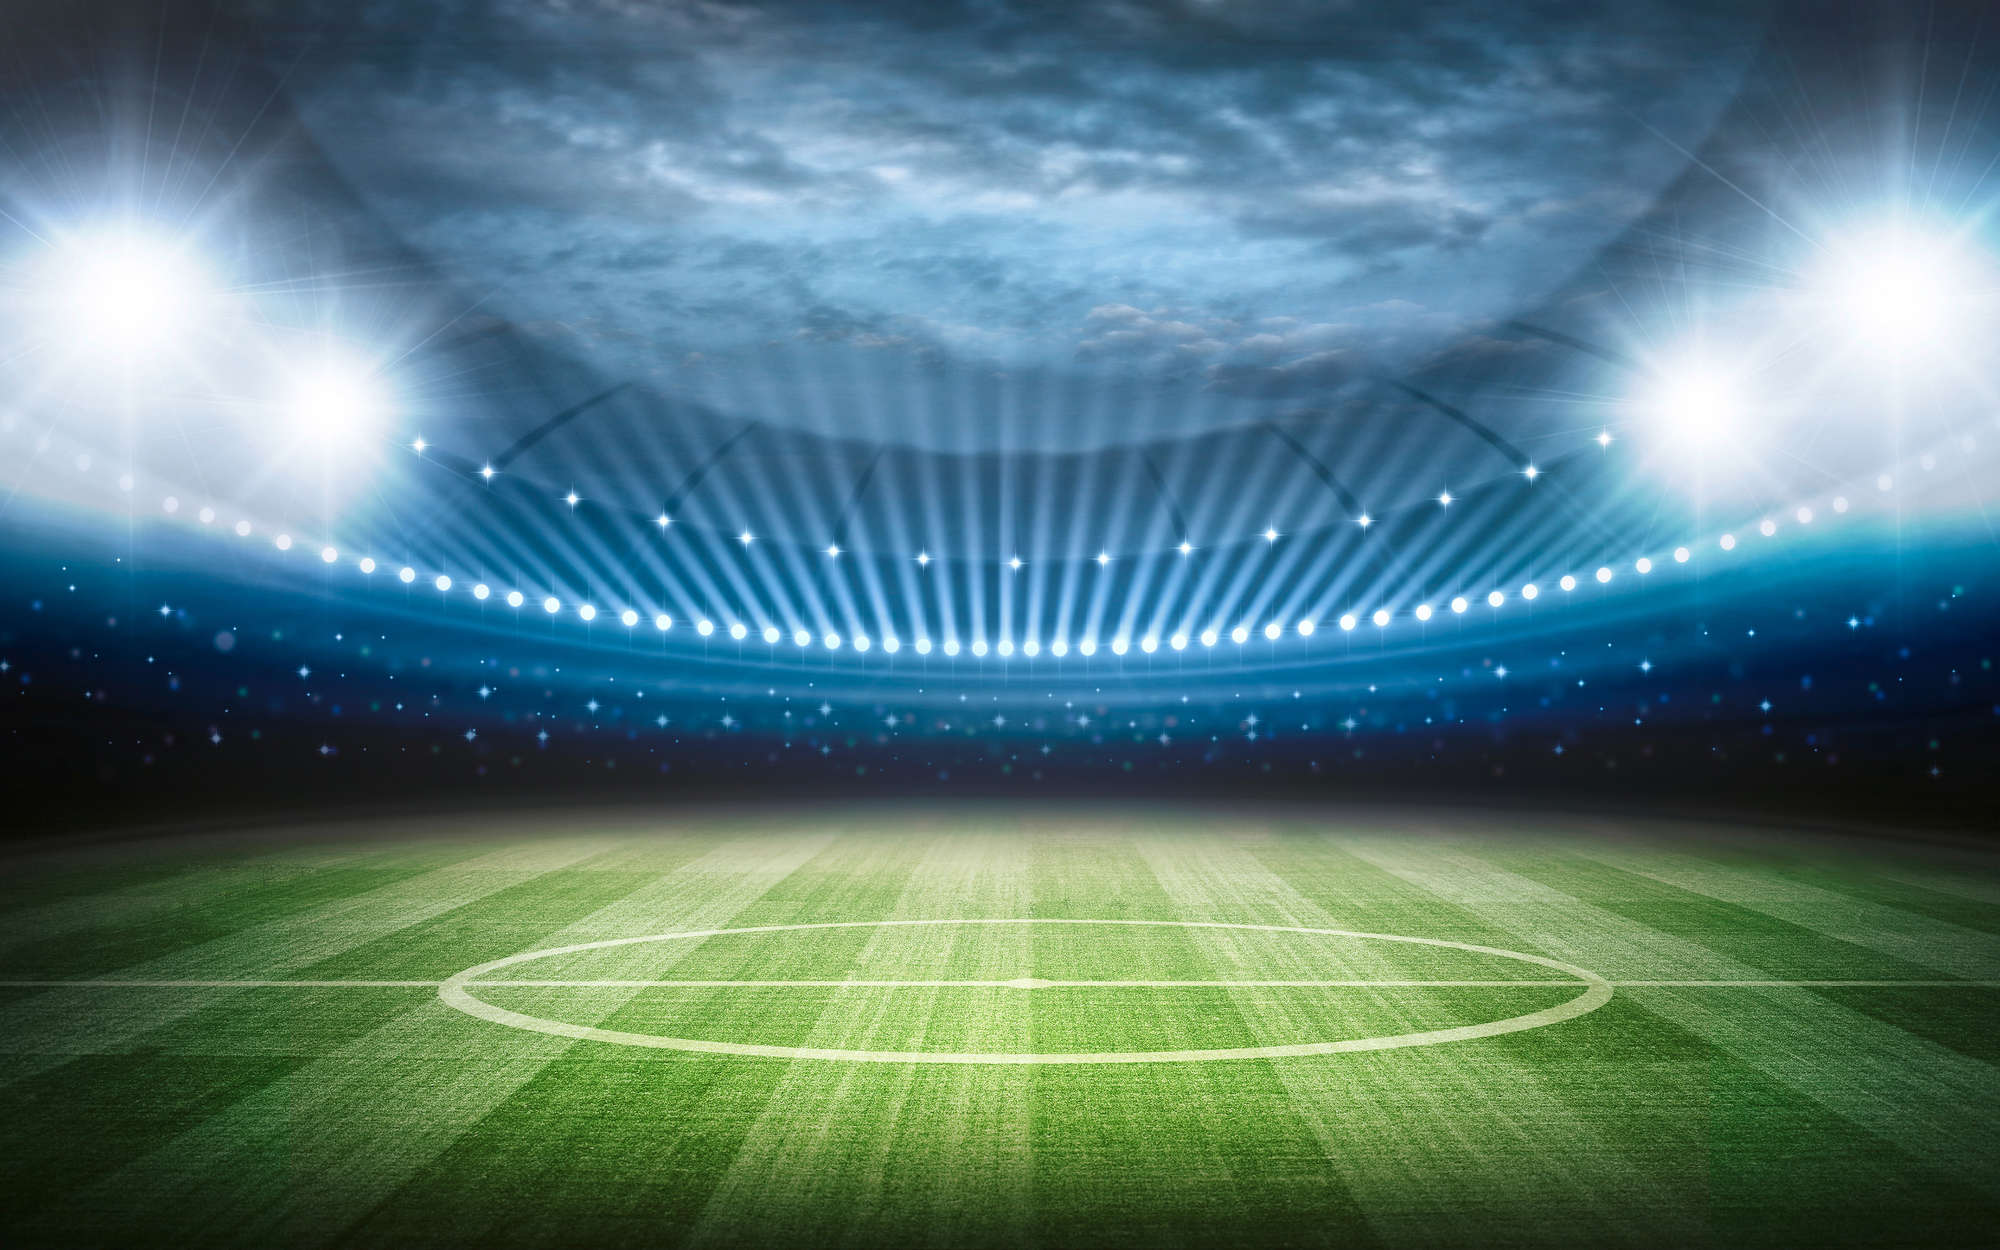             Football wallpaper stadium with floodlights - pearlescent smooth fleece
        